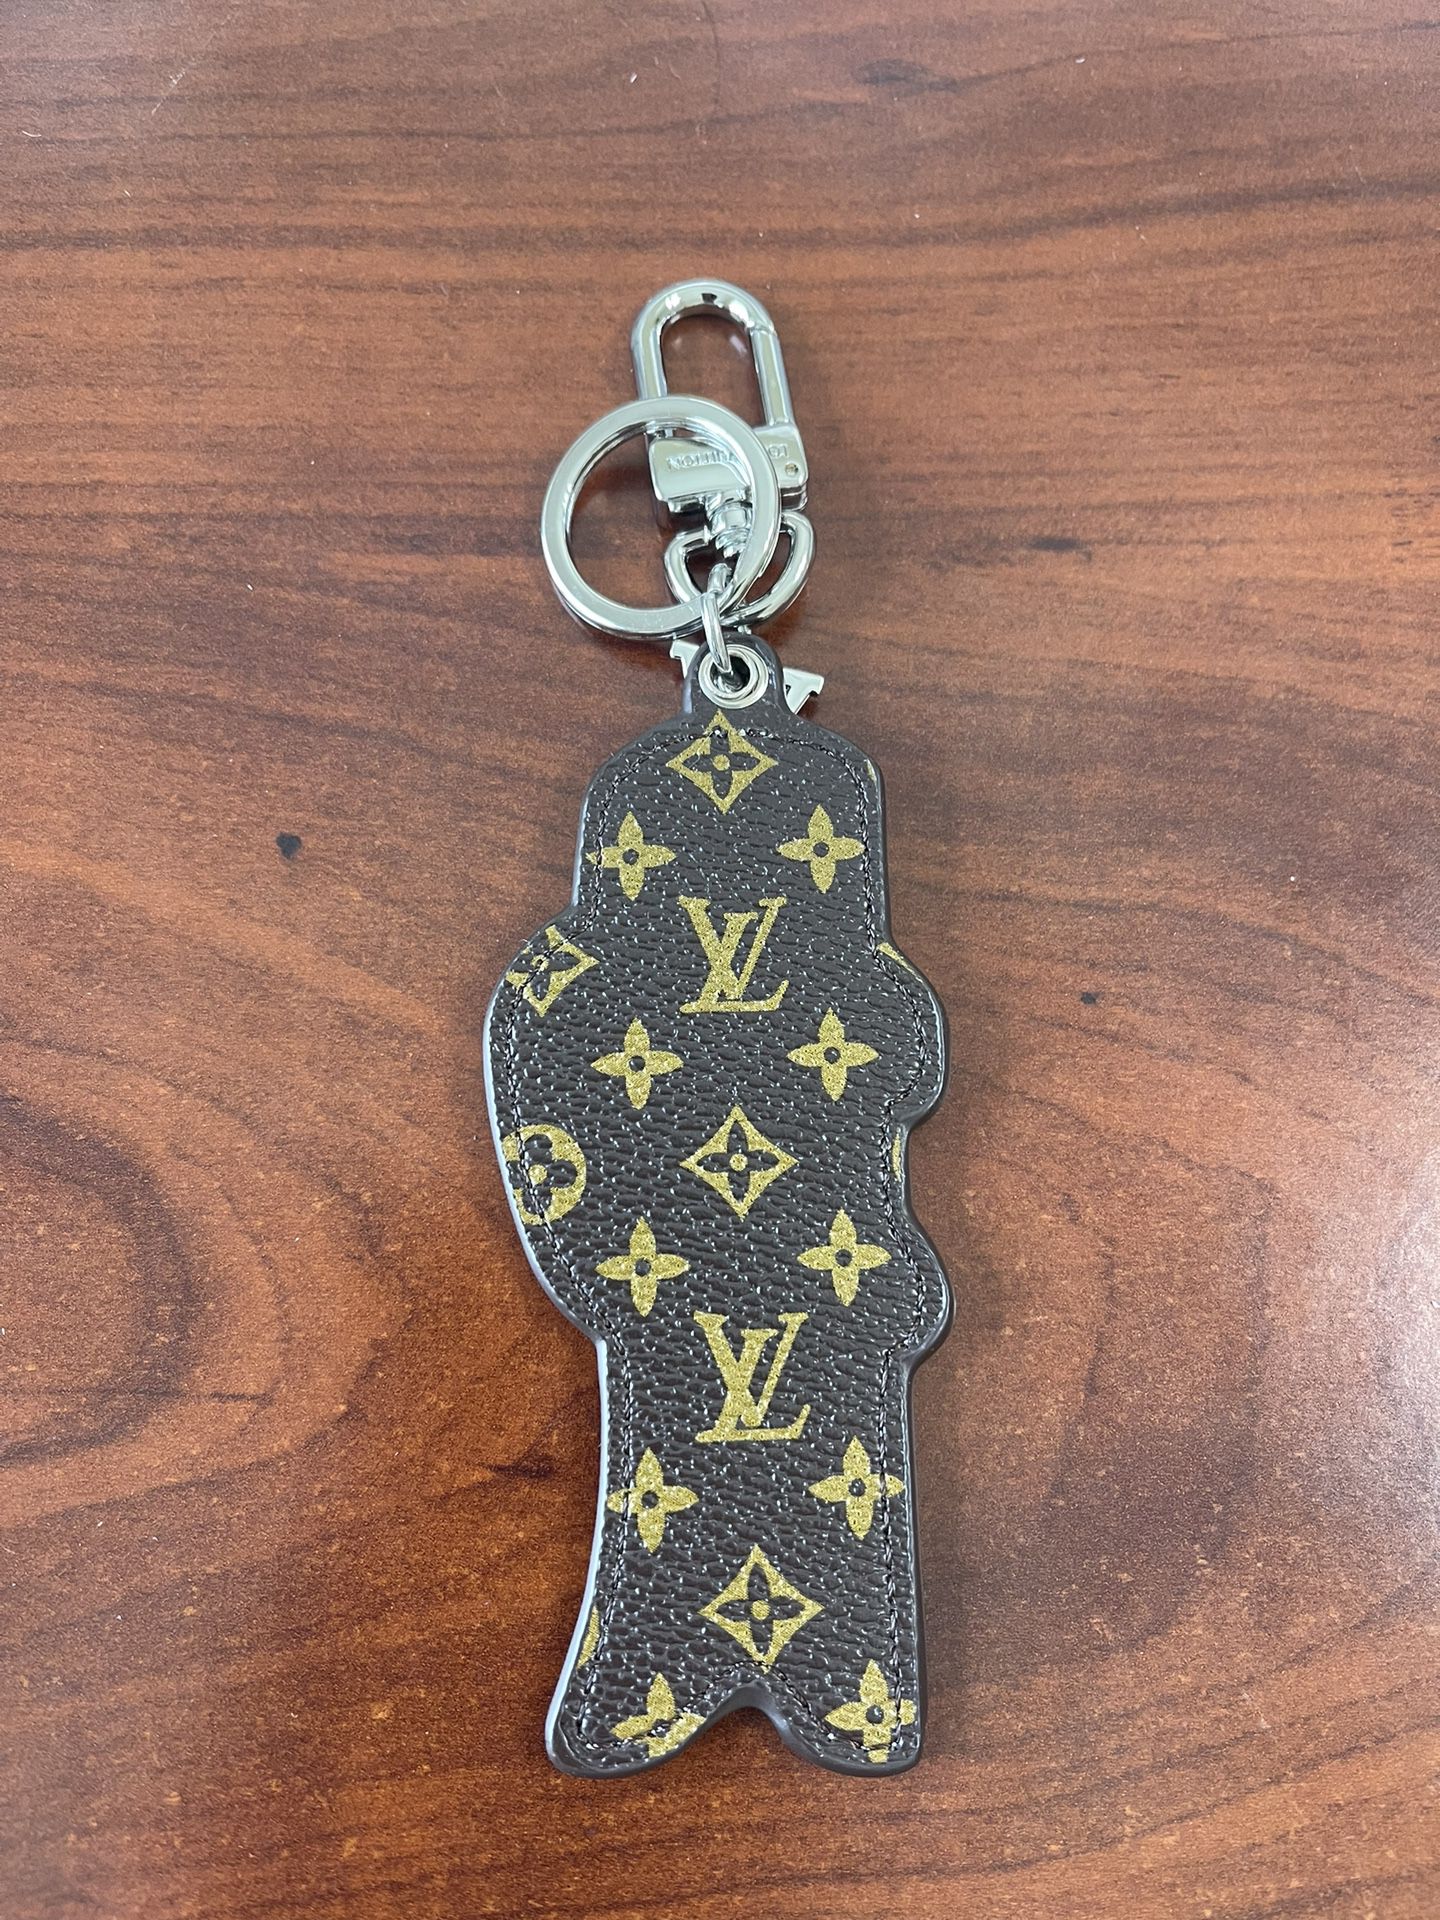 Lv Dog Keychain for Sale in Dania Beach, FL - OfferUp